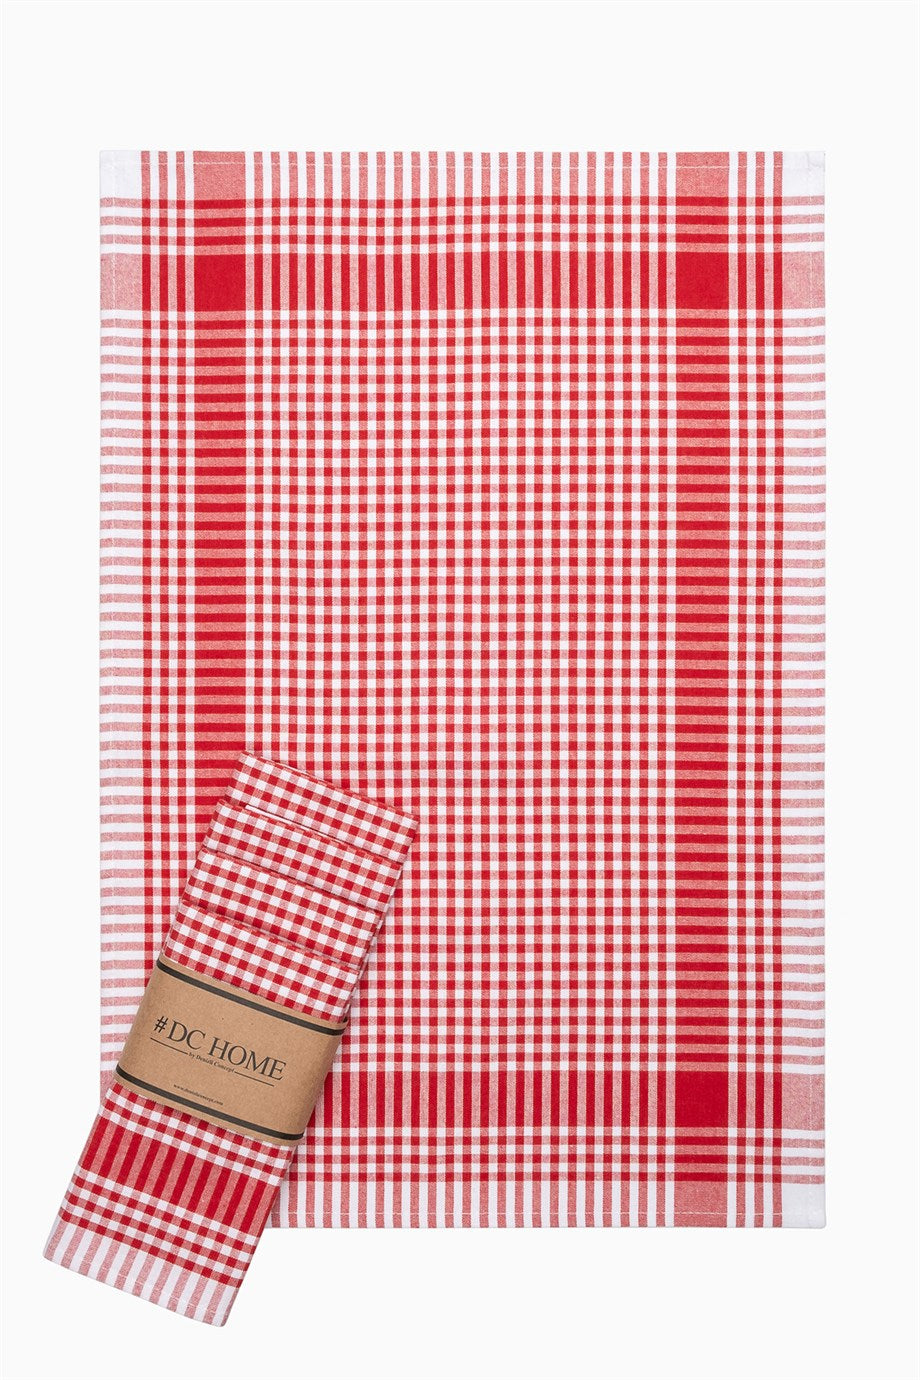 DENIZLI CONCEPT Pöti Checkered Tea Towel Red